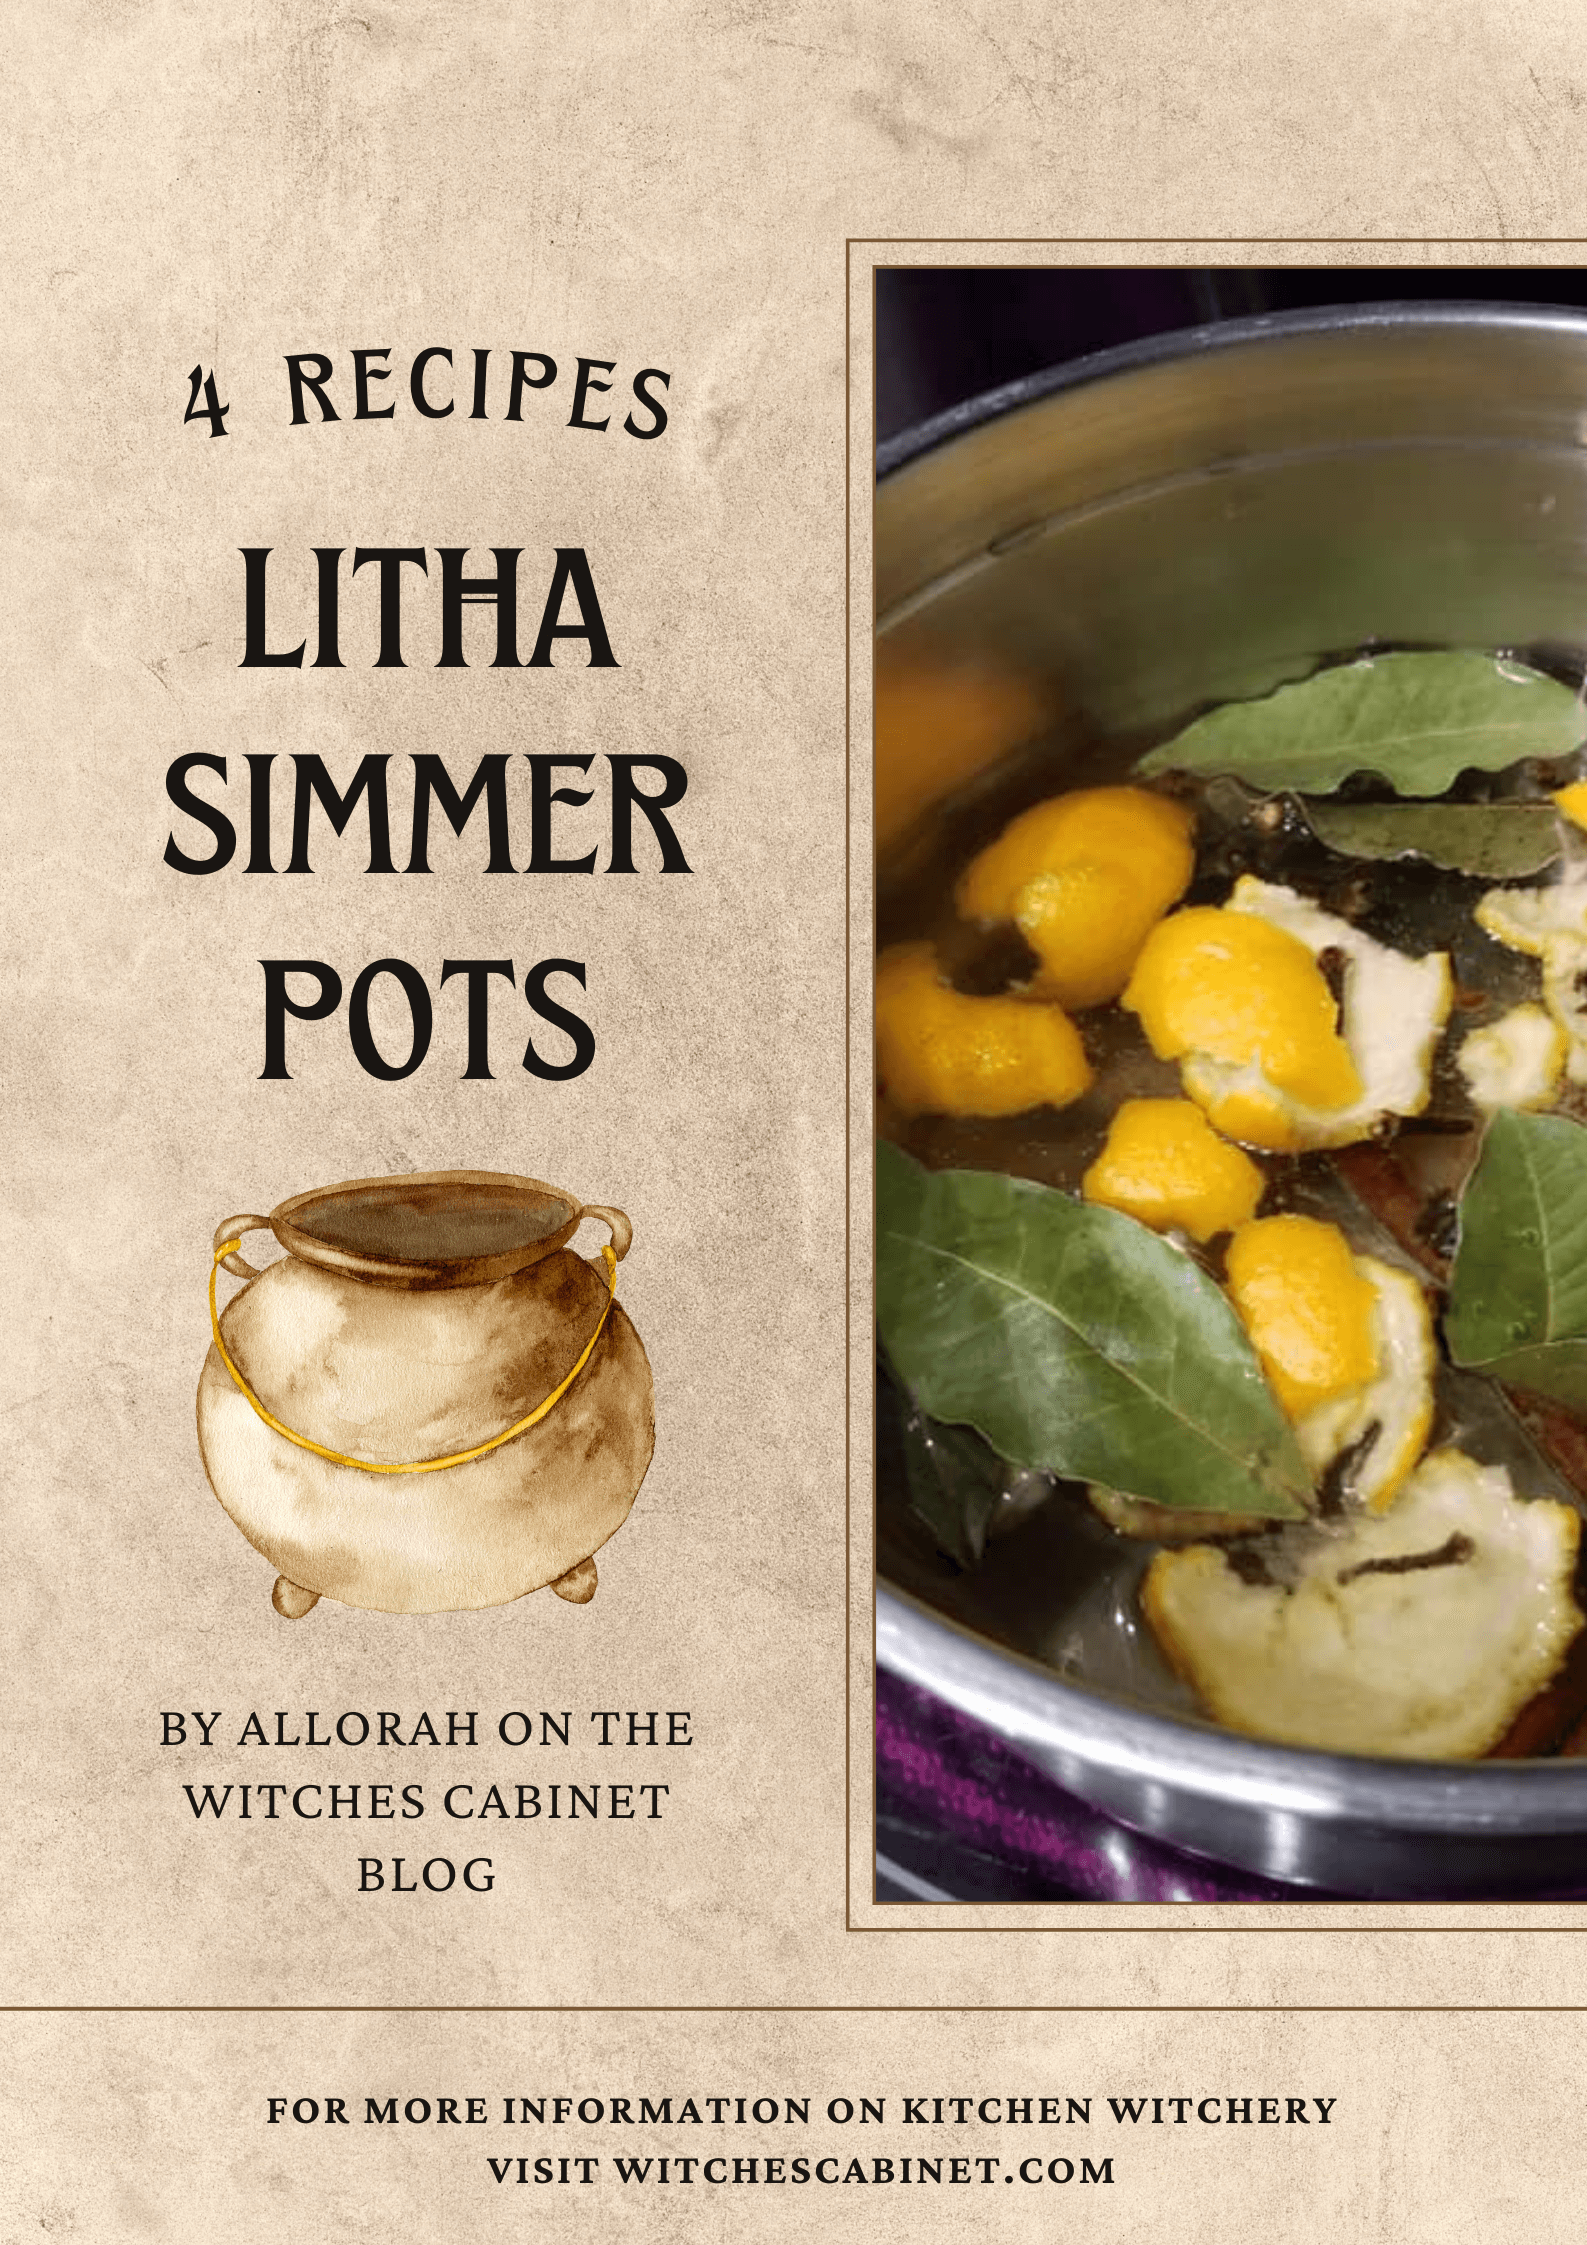 Simmer Pots for Litha / Summer Solstice